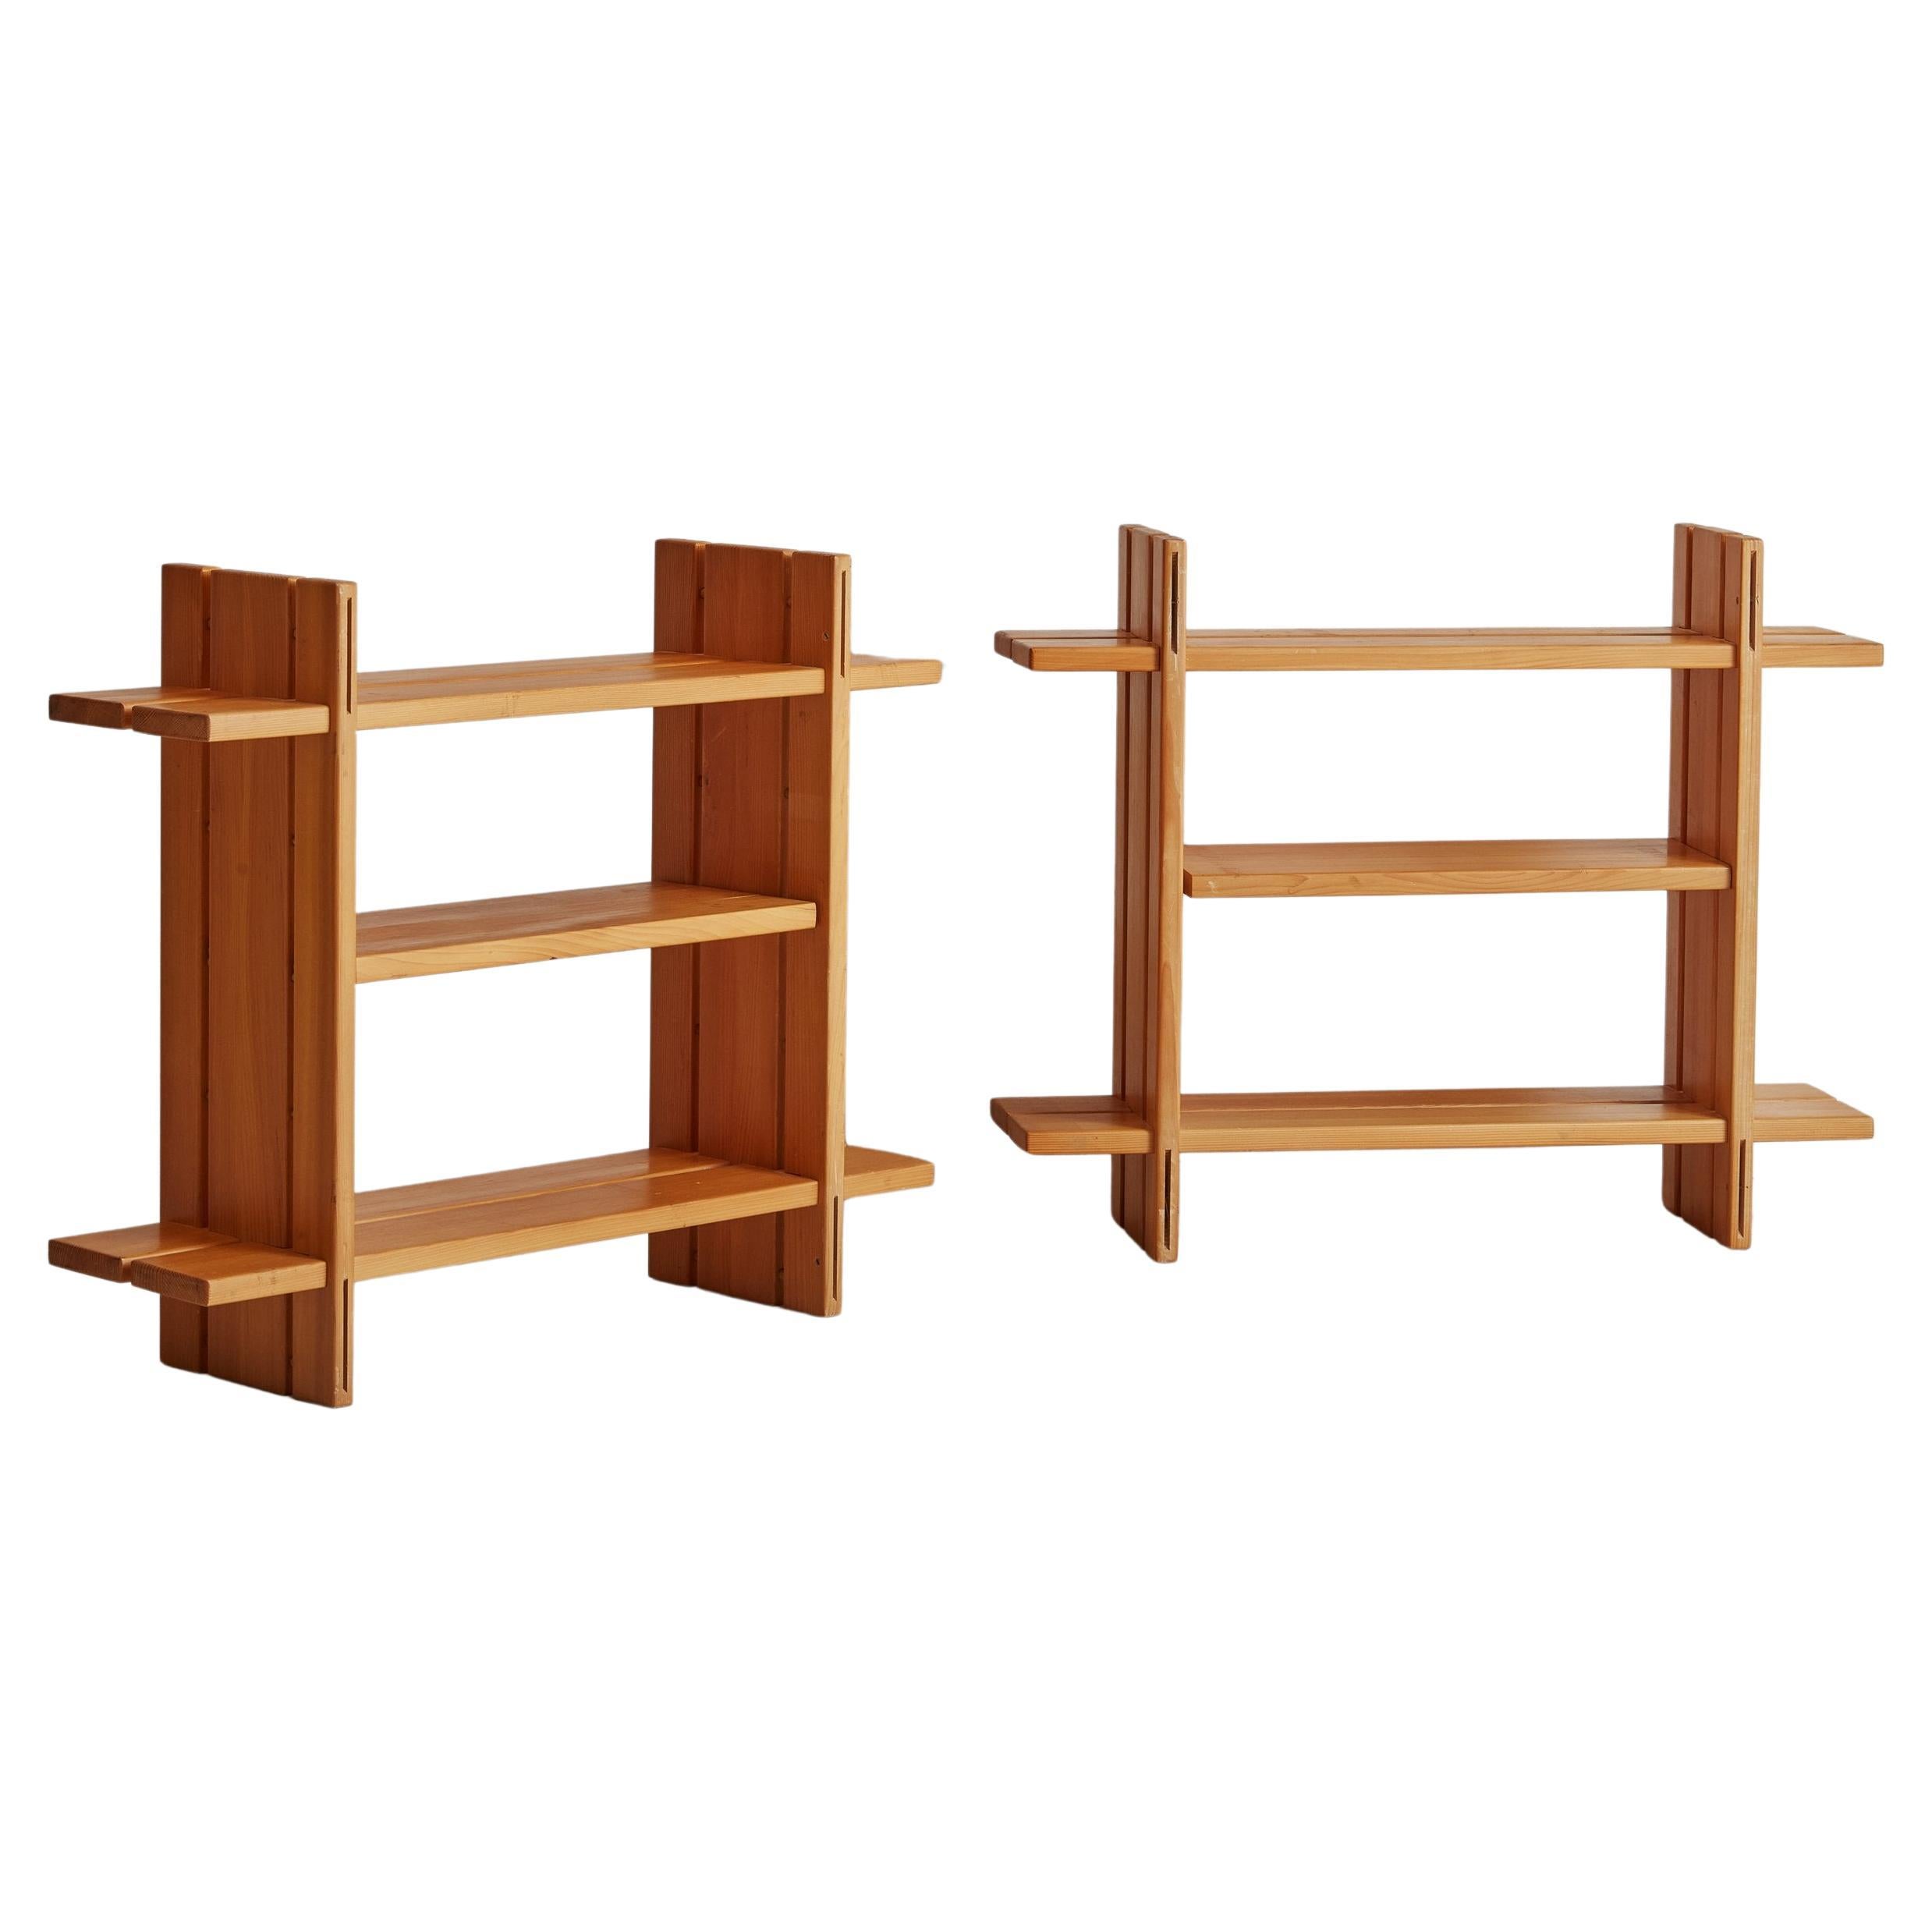 Pair of Pine Wood Shelves by Maison Regain, France 1980s For Sale